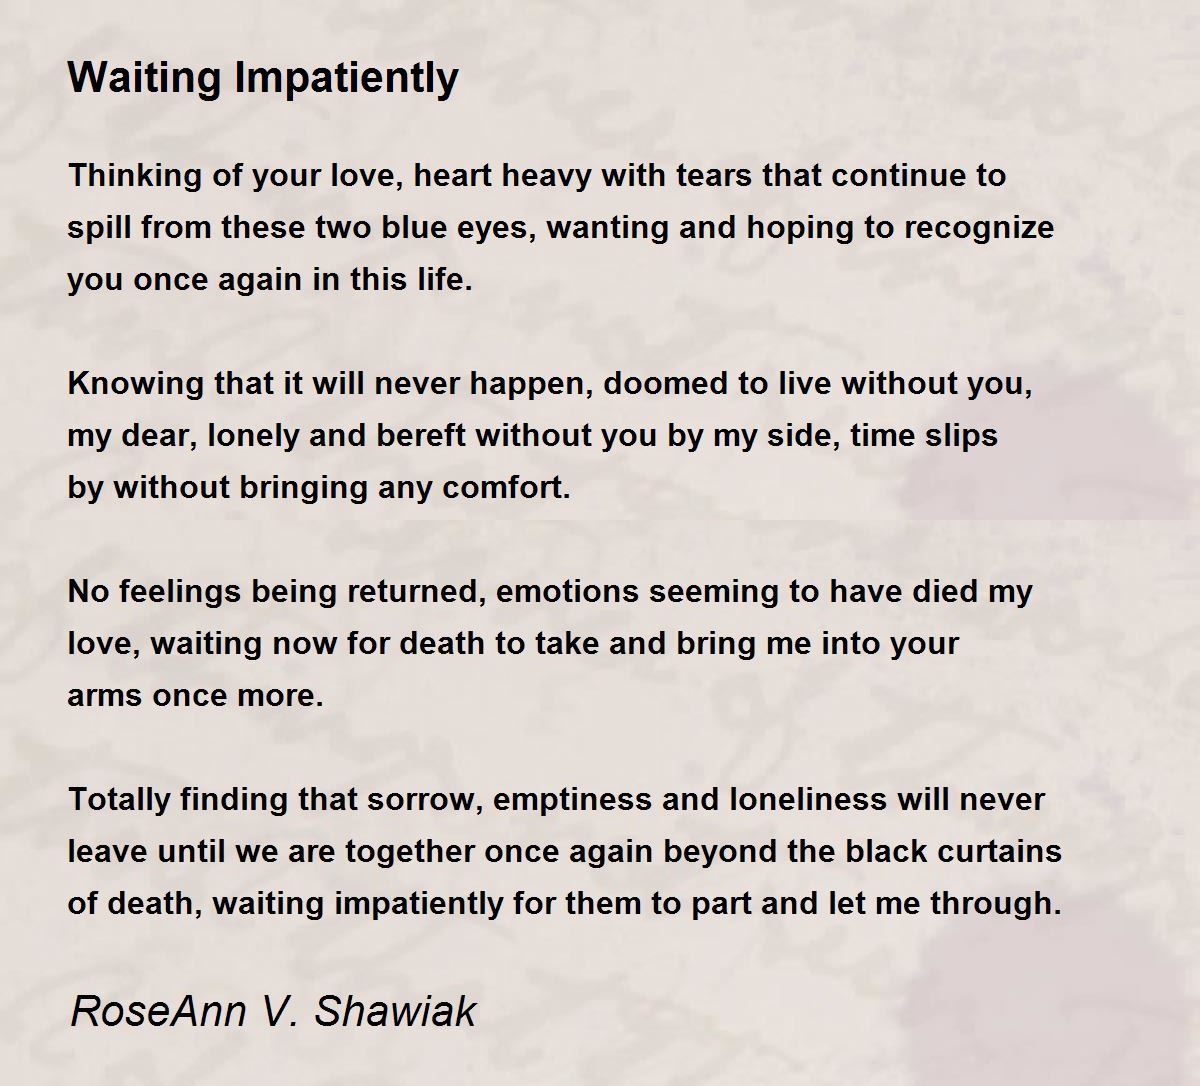 Waiting Impatiently - Waiting Impatiently Poem by RoseAnn V. Shawiak